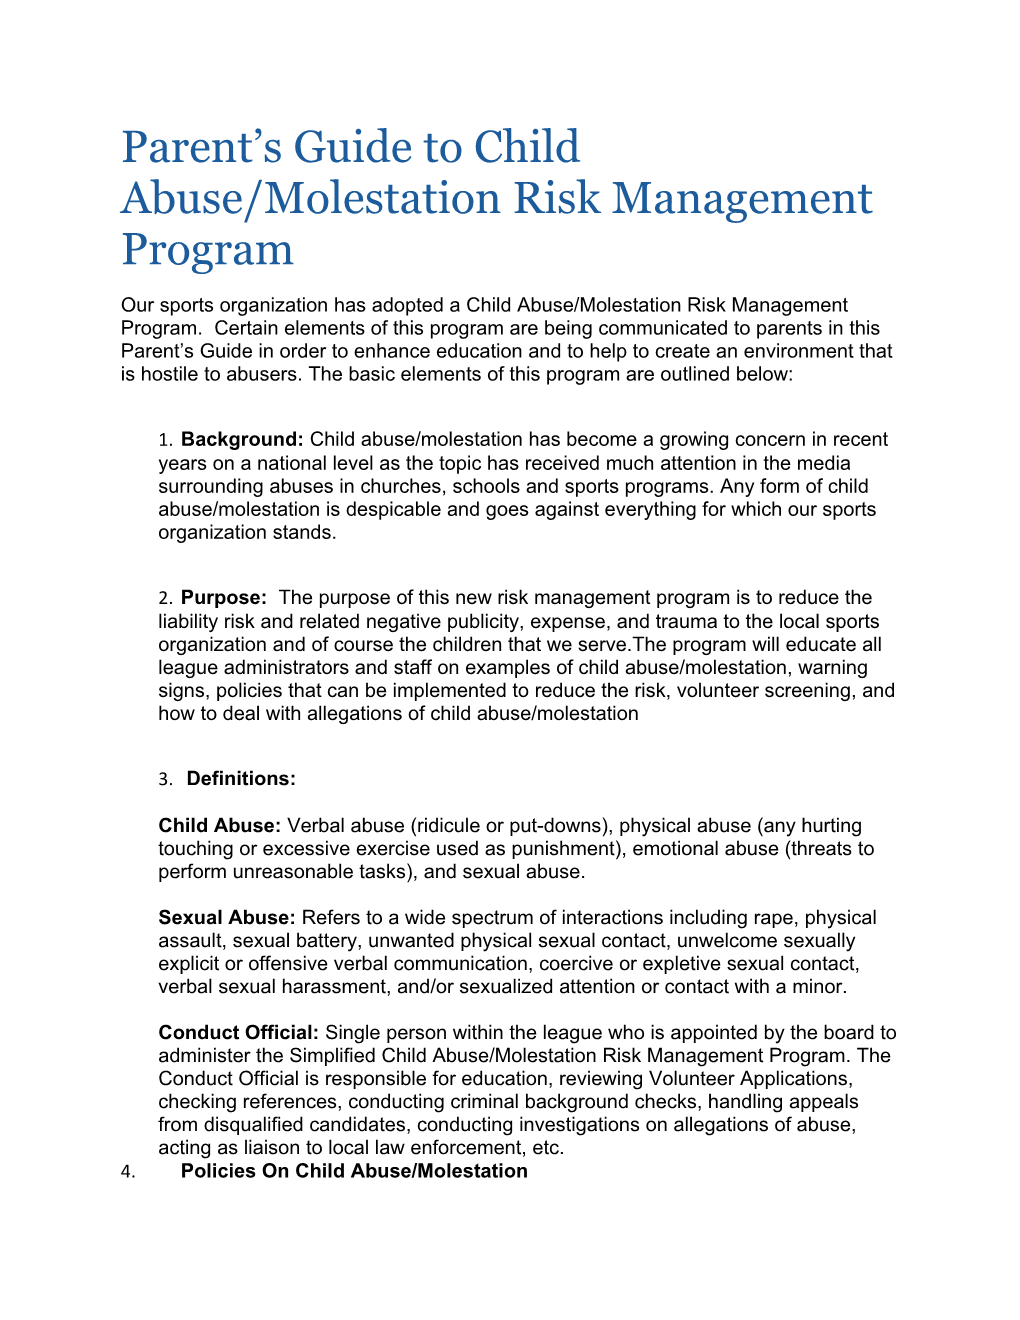 Parent S Guide to Child Abuse/Molestation Risk Management Program